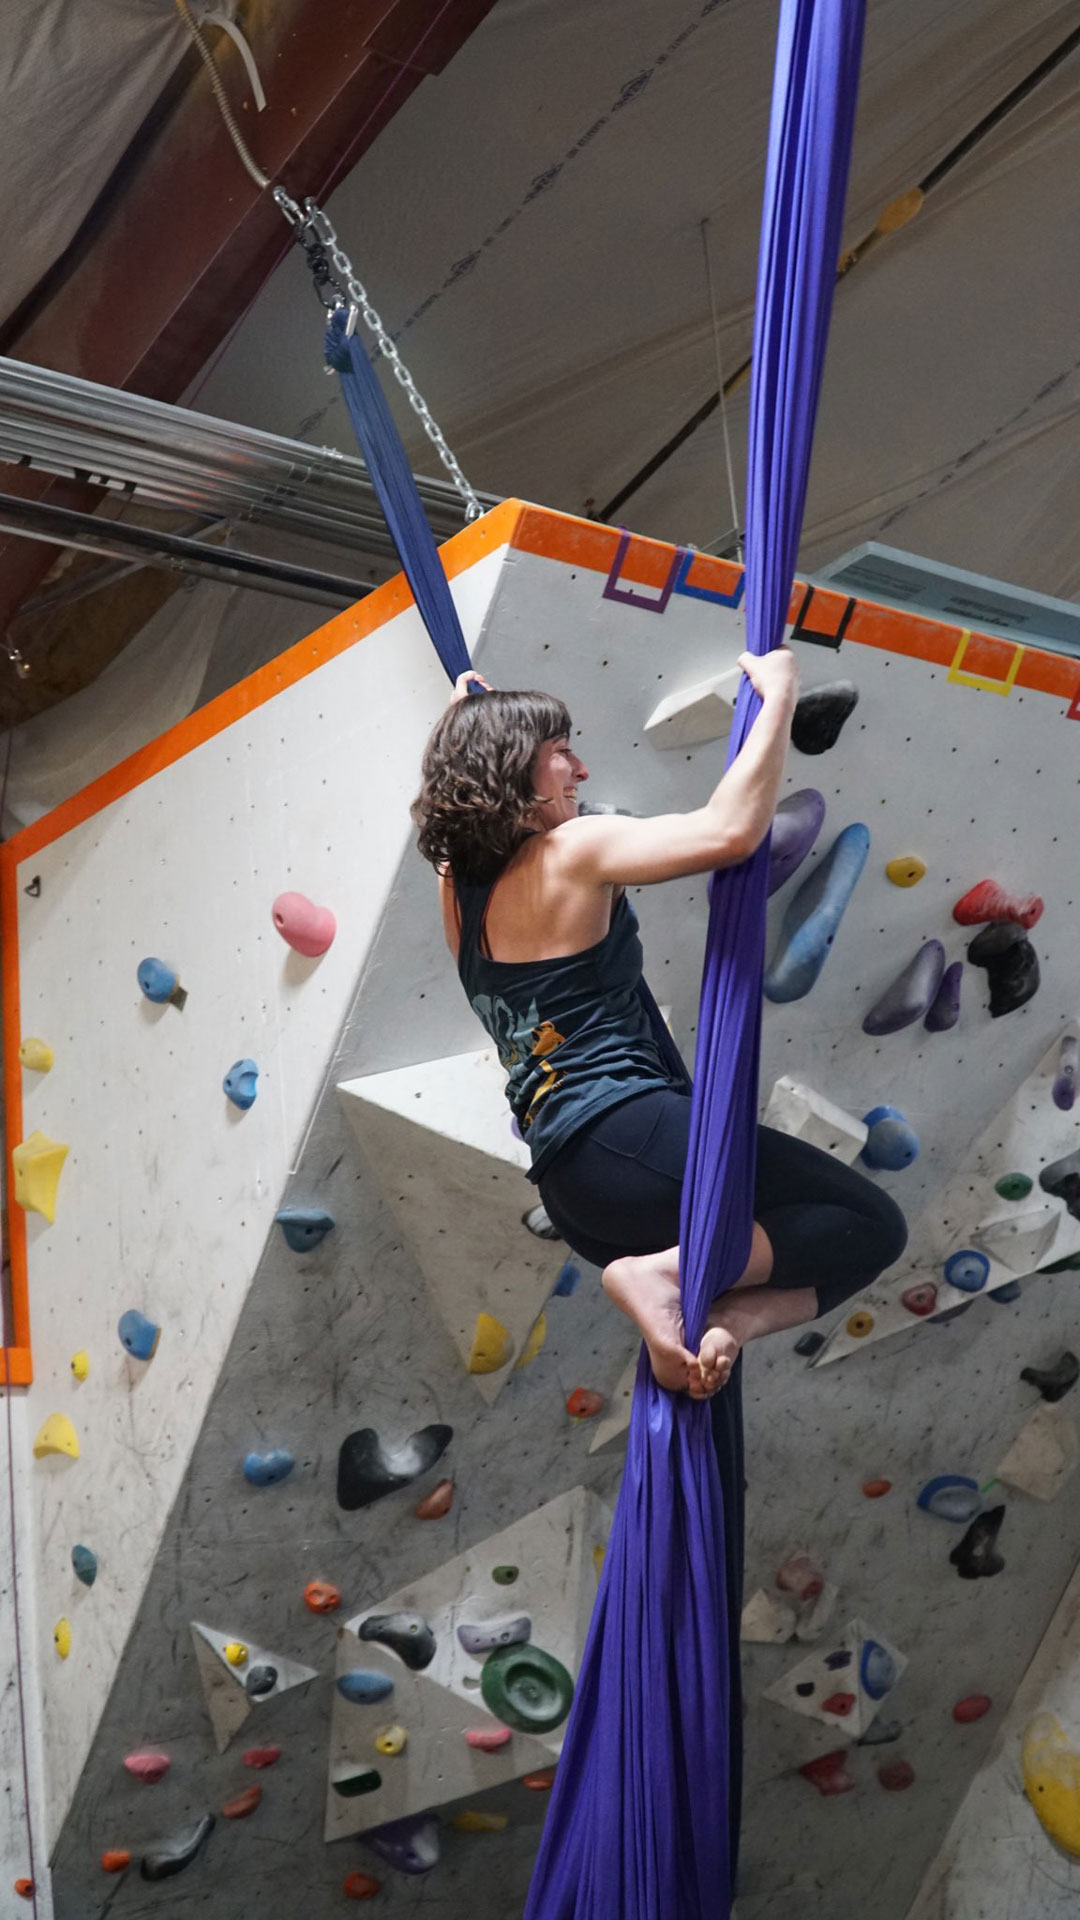 Piperno practicing aerial silks at Teton Rock Gym